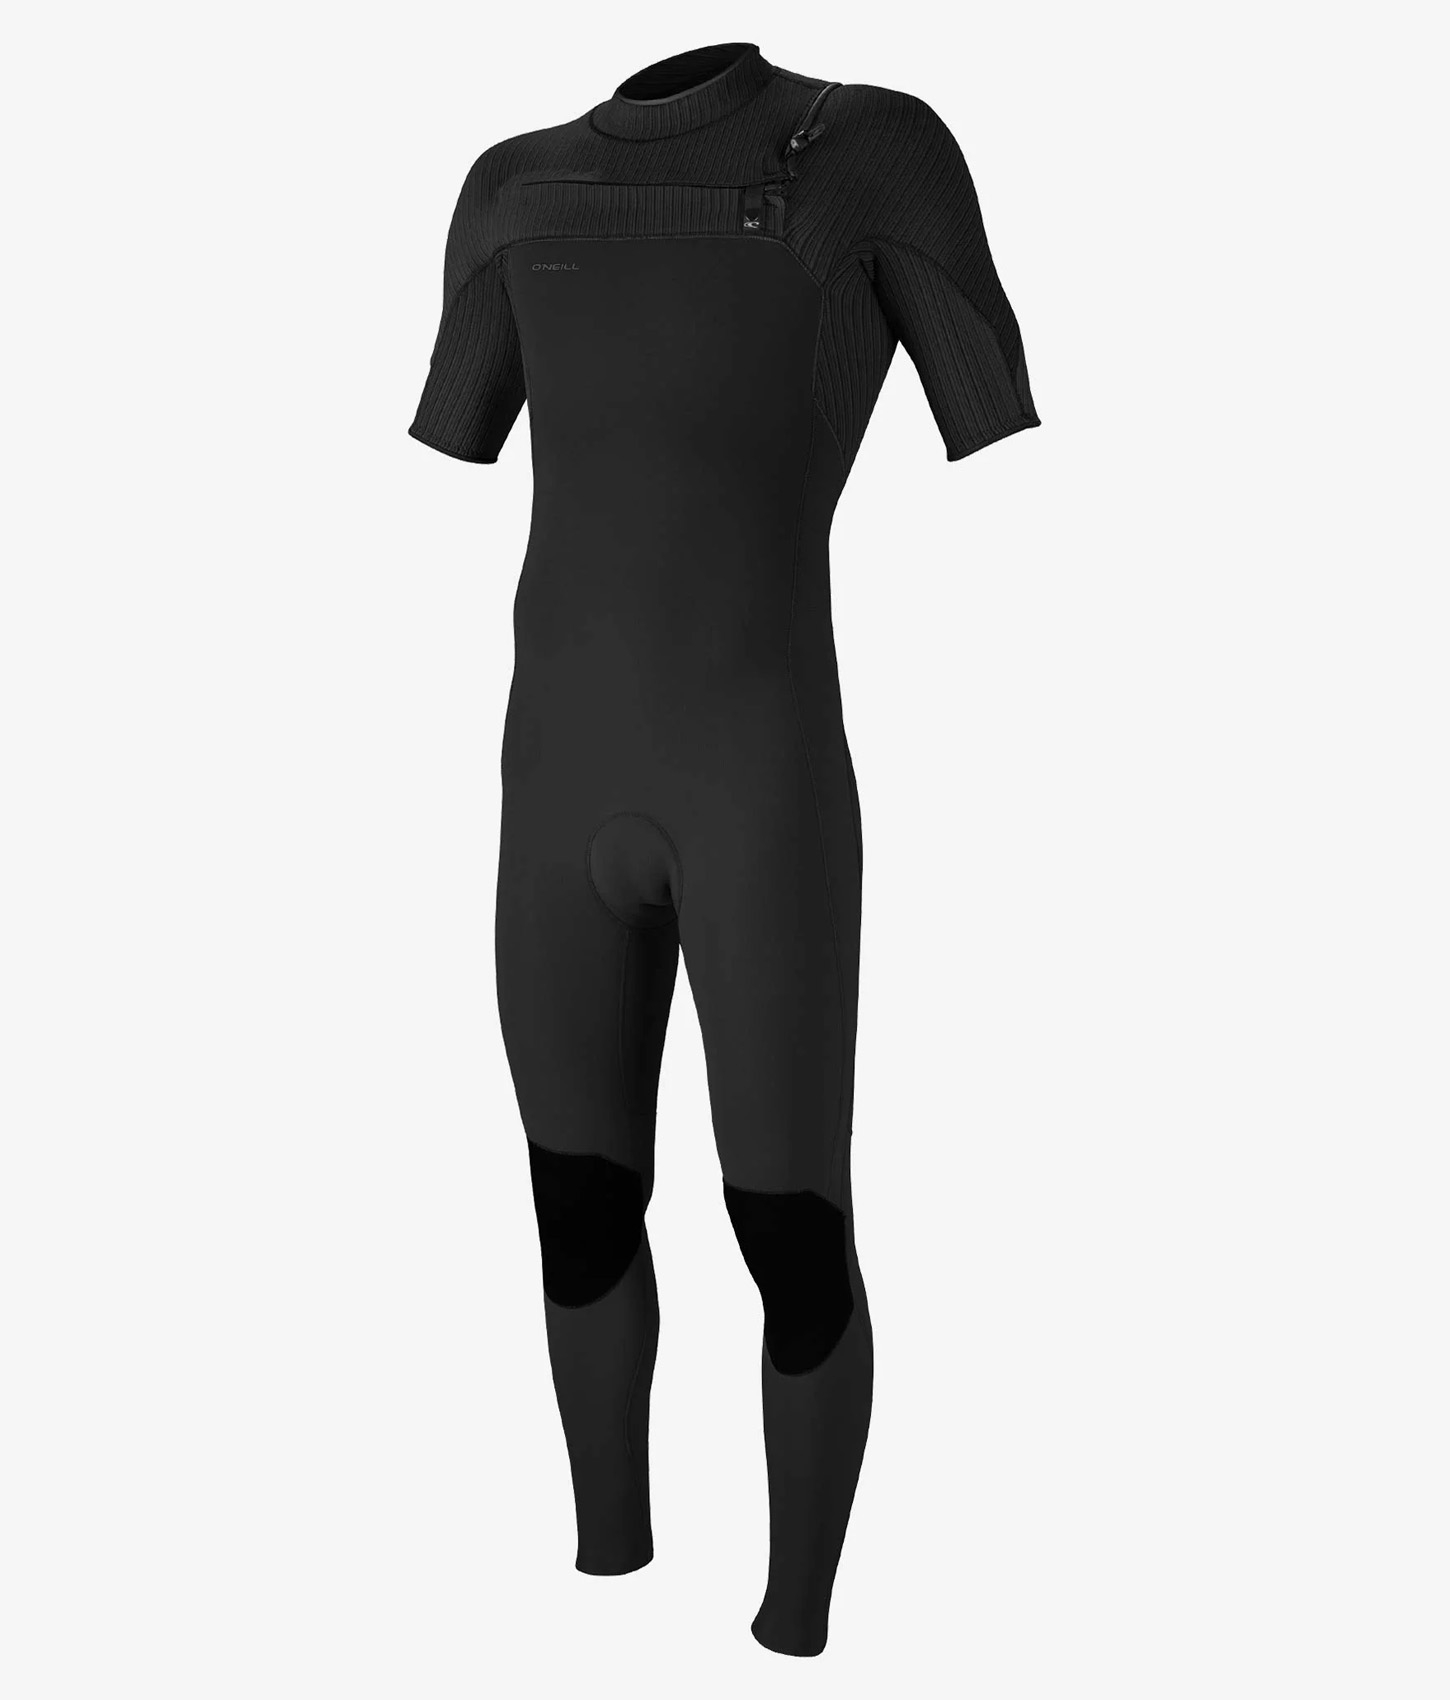 LOOSE FIT MEN'S SHORT SLEEVE RASH GUARD - Hyperflex Wetsuits